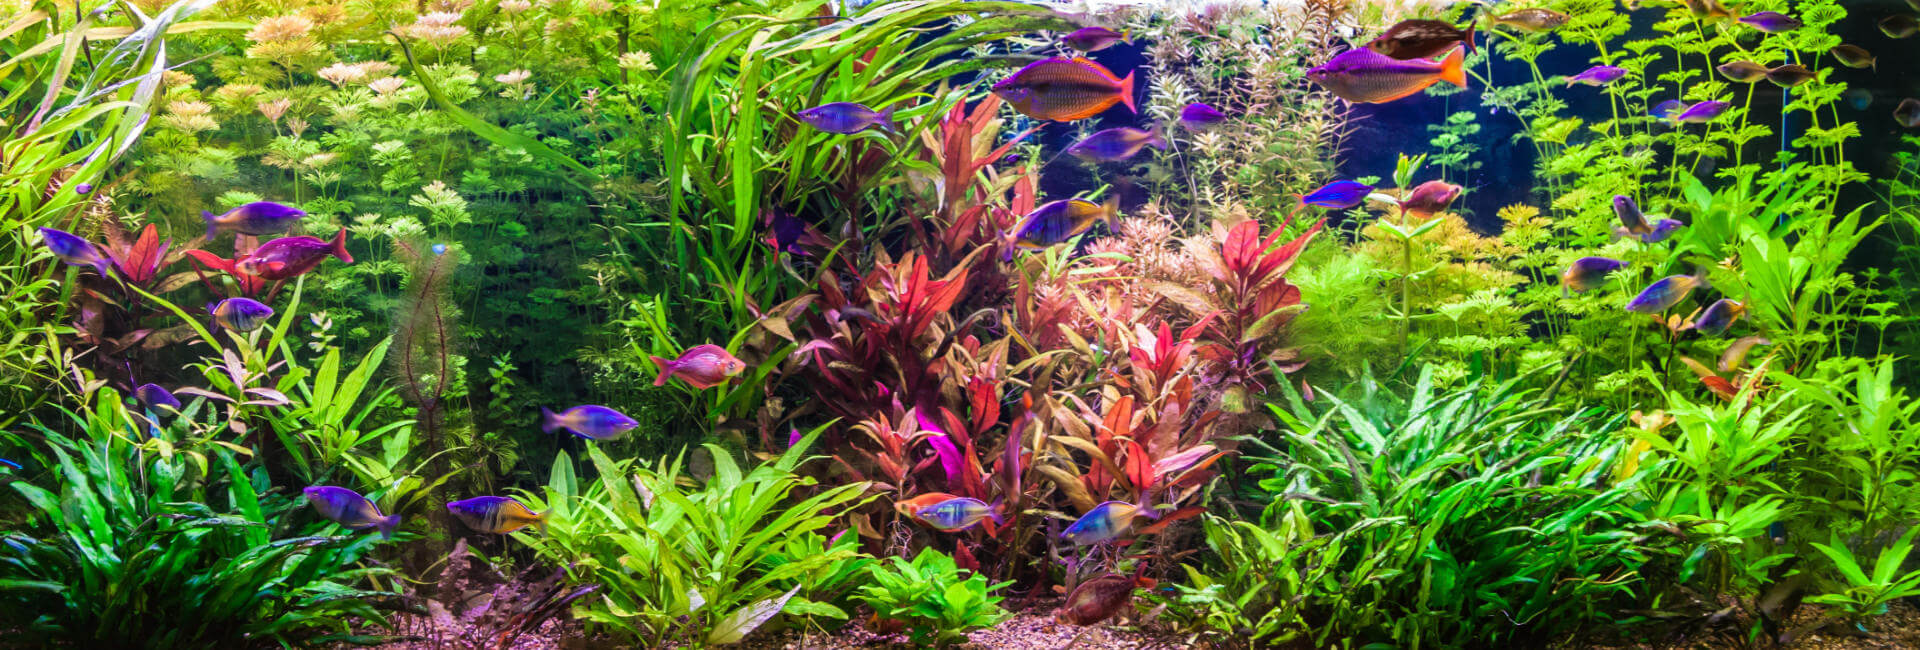 Aquarium Pflanzen für Gesellschaftsaquarium